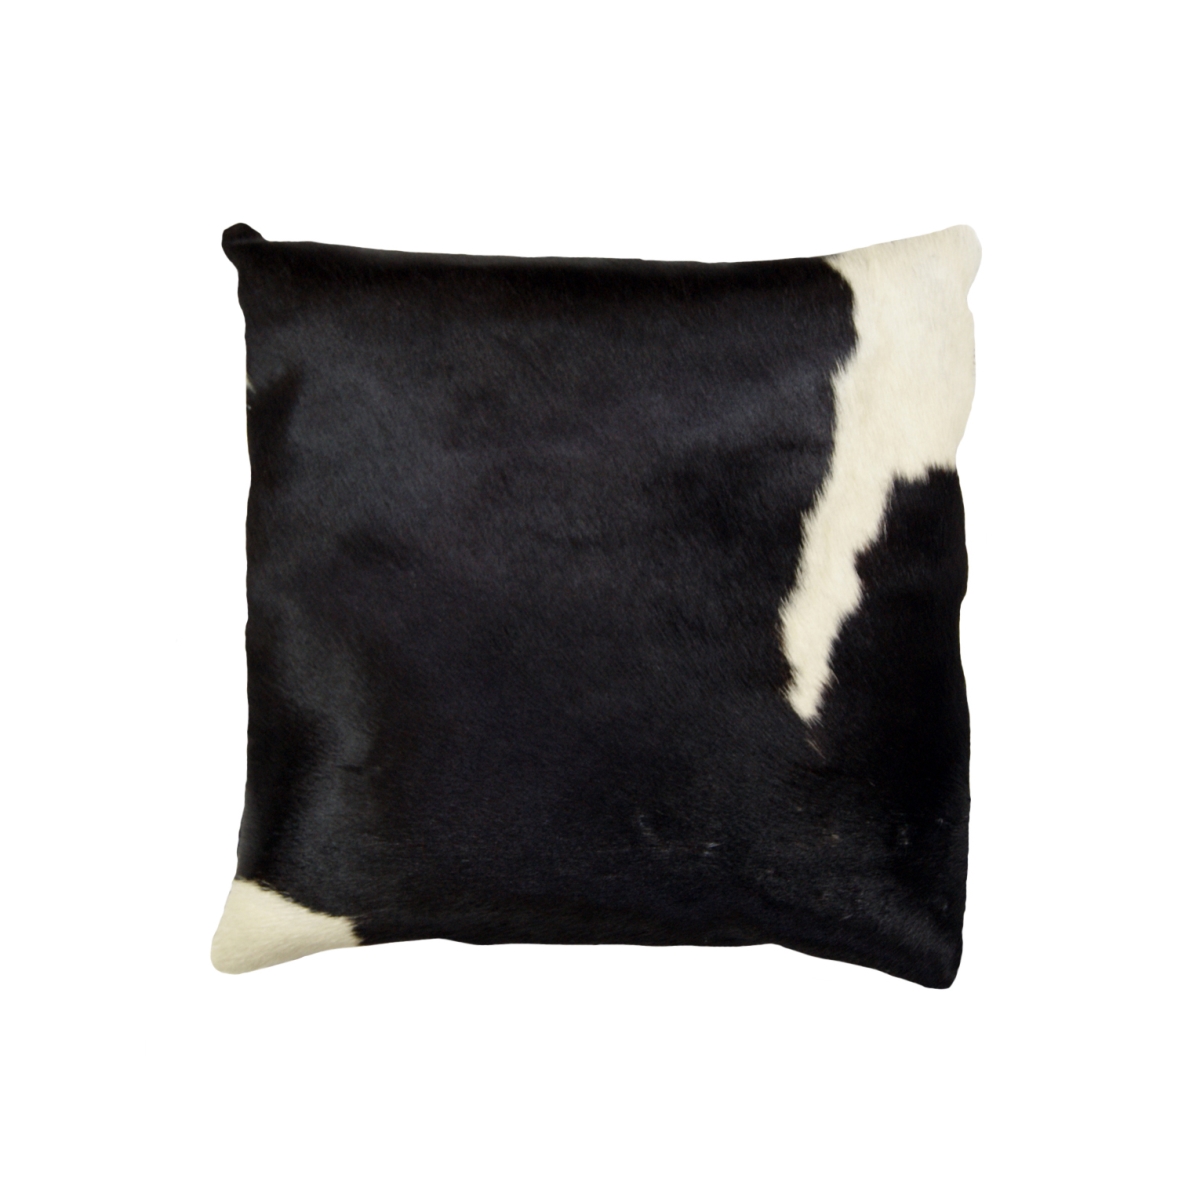 293205 18 X 18 In. Torino Kobe Cowhide Pillow - Black & White